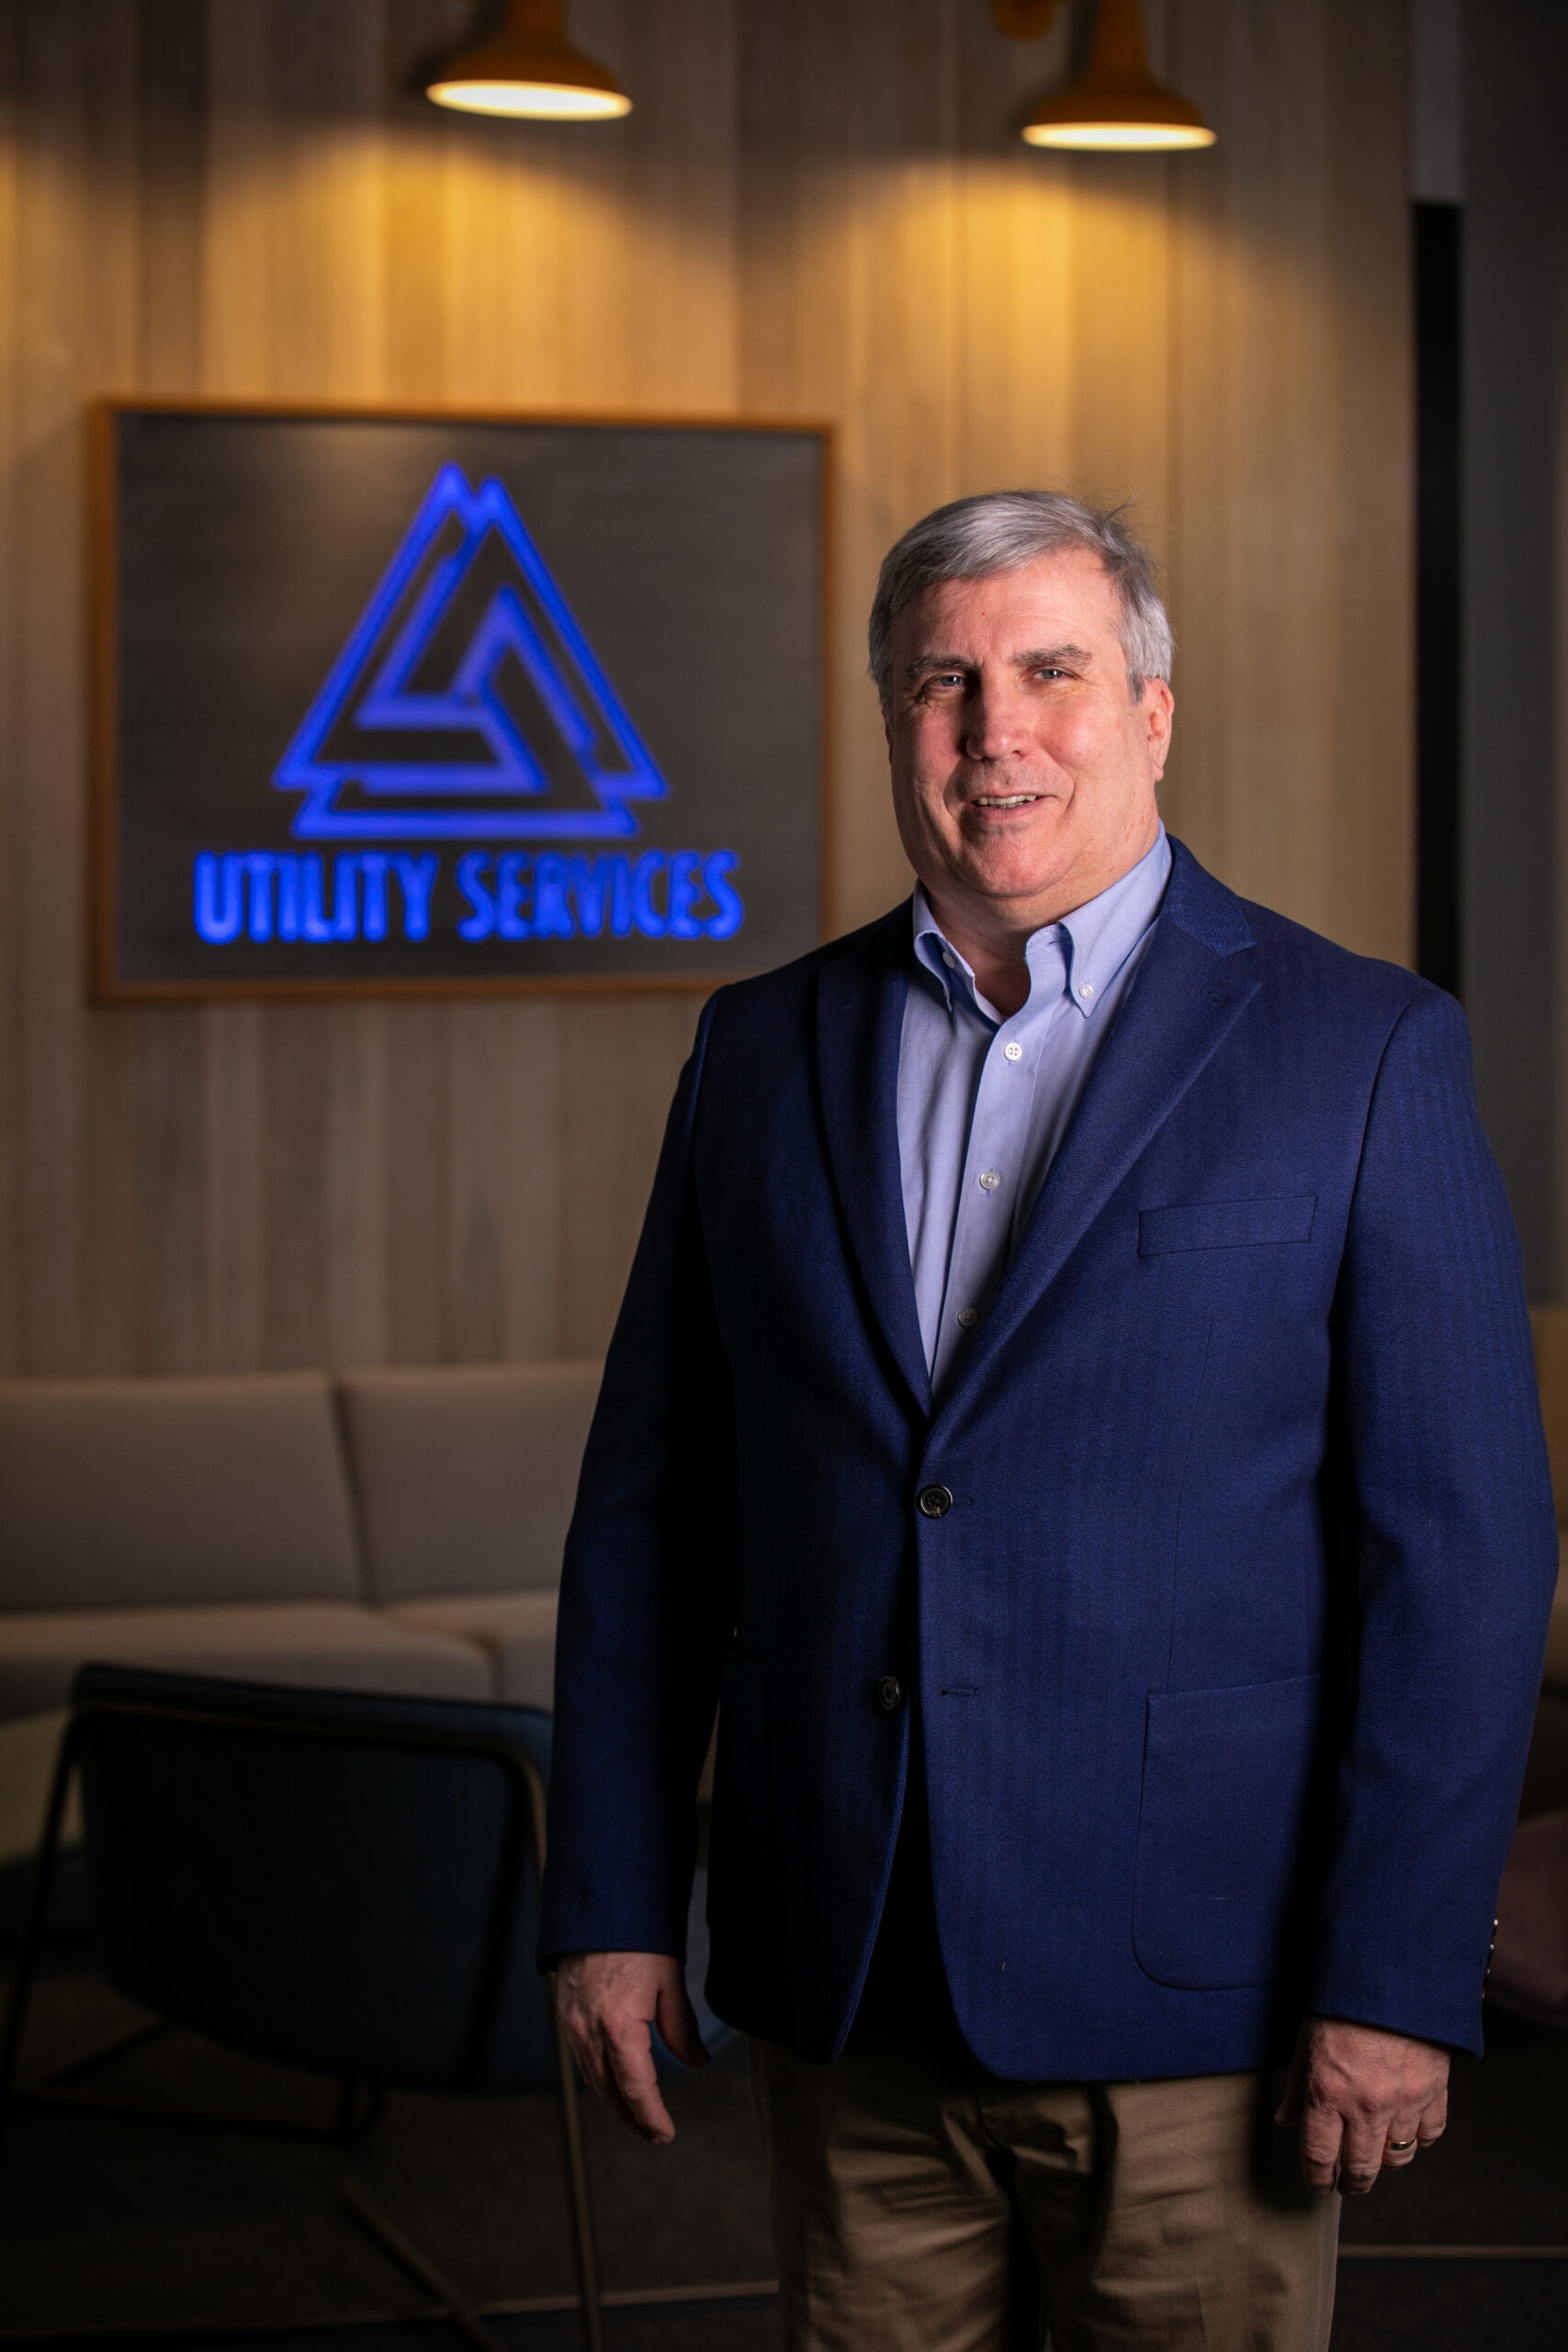 John Helme - Utility Services